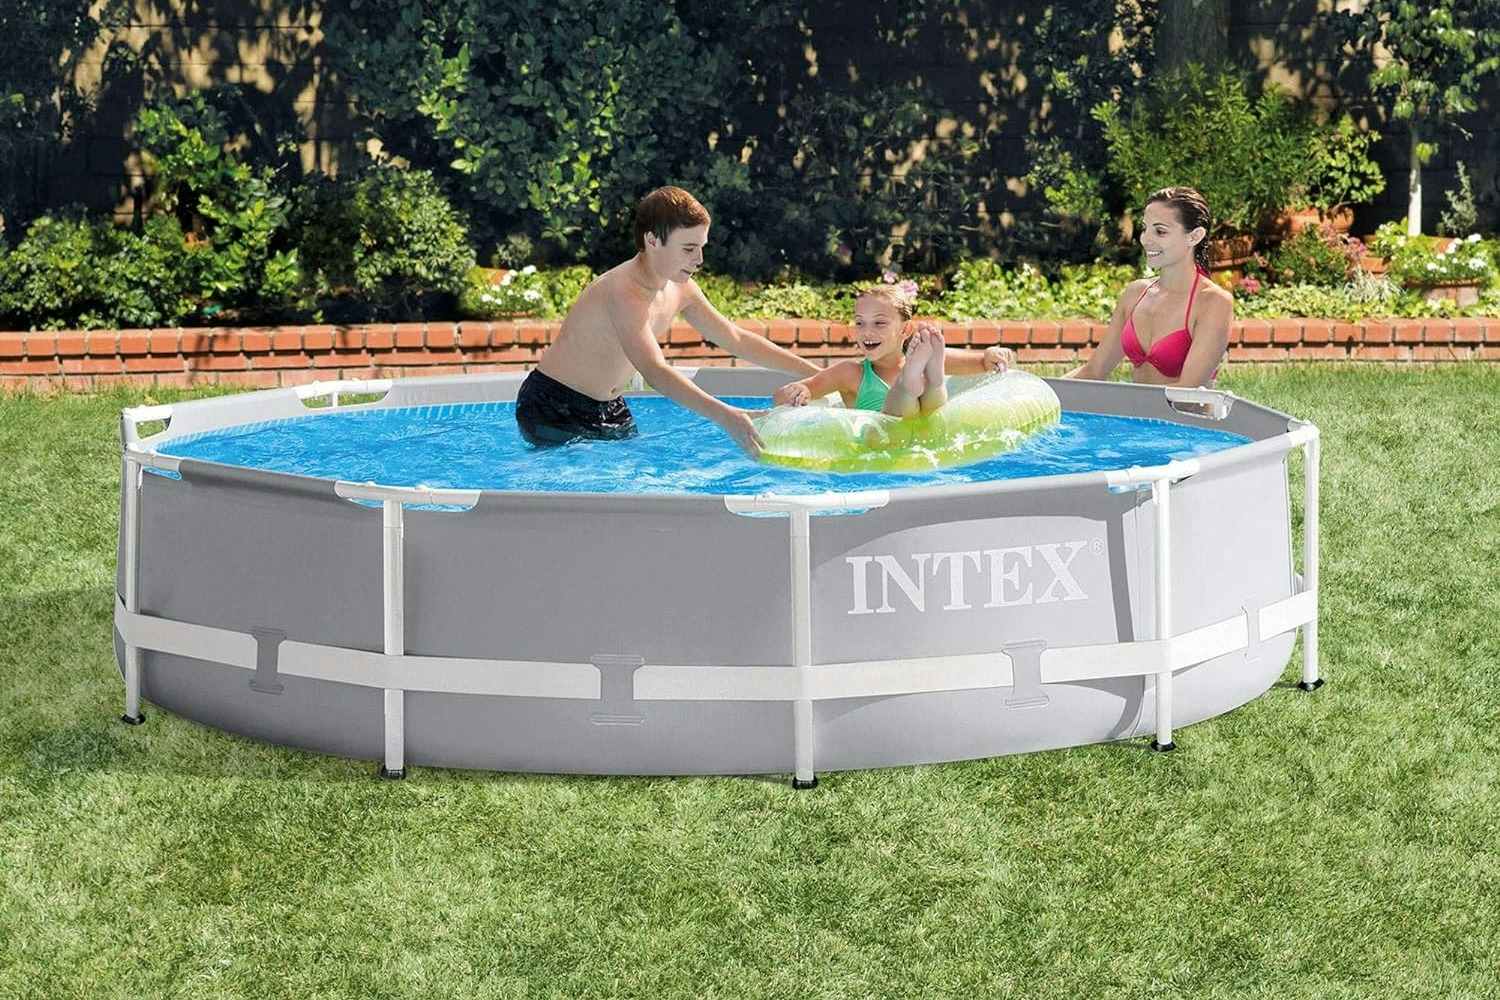 Intex Aboveground Pool, as Low as $79.99 on Amazon (Reg. $160+)